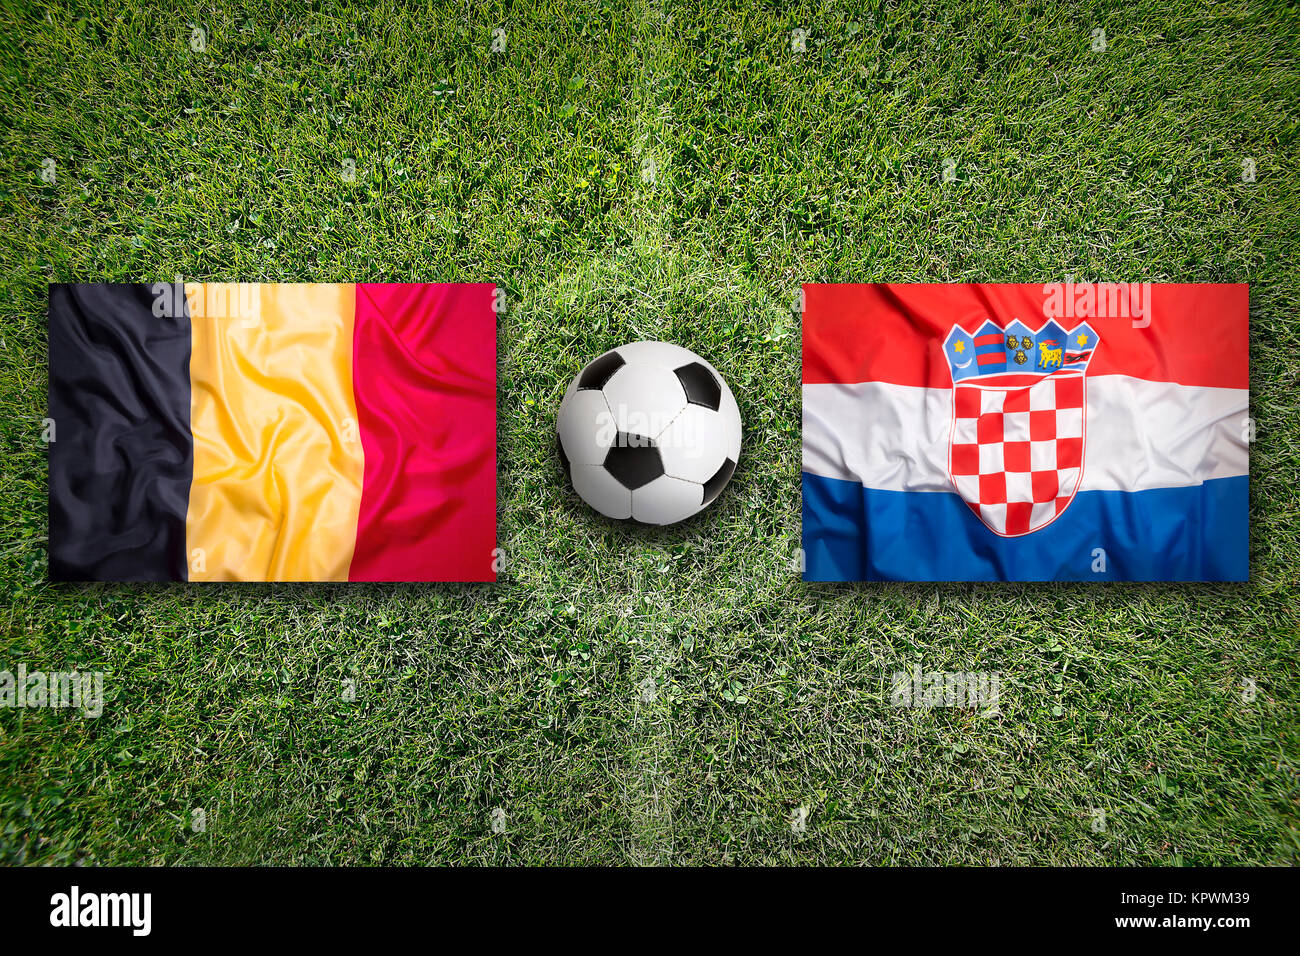 Belgium vs. Croatia flags on soccer field Stock Photo - Alamy